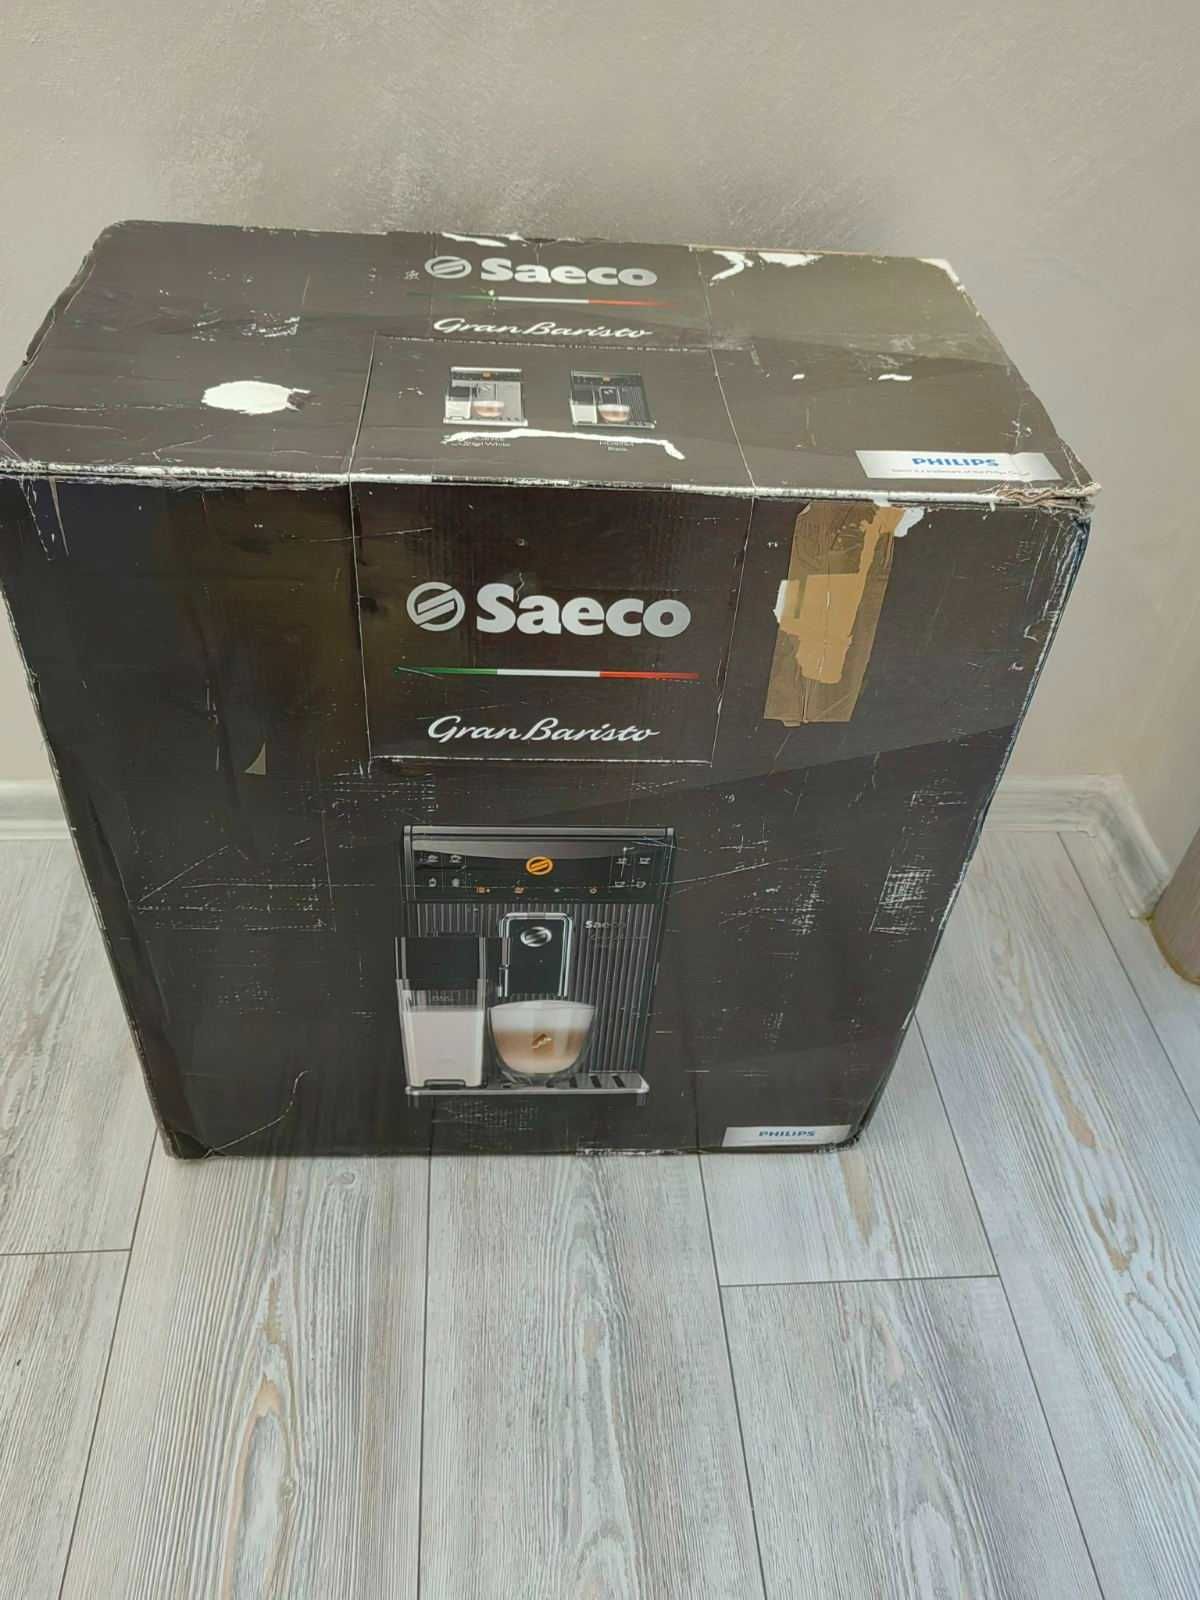 Saeco HD 8956 pico granbaristo - в кашон , за подарък